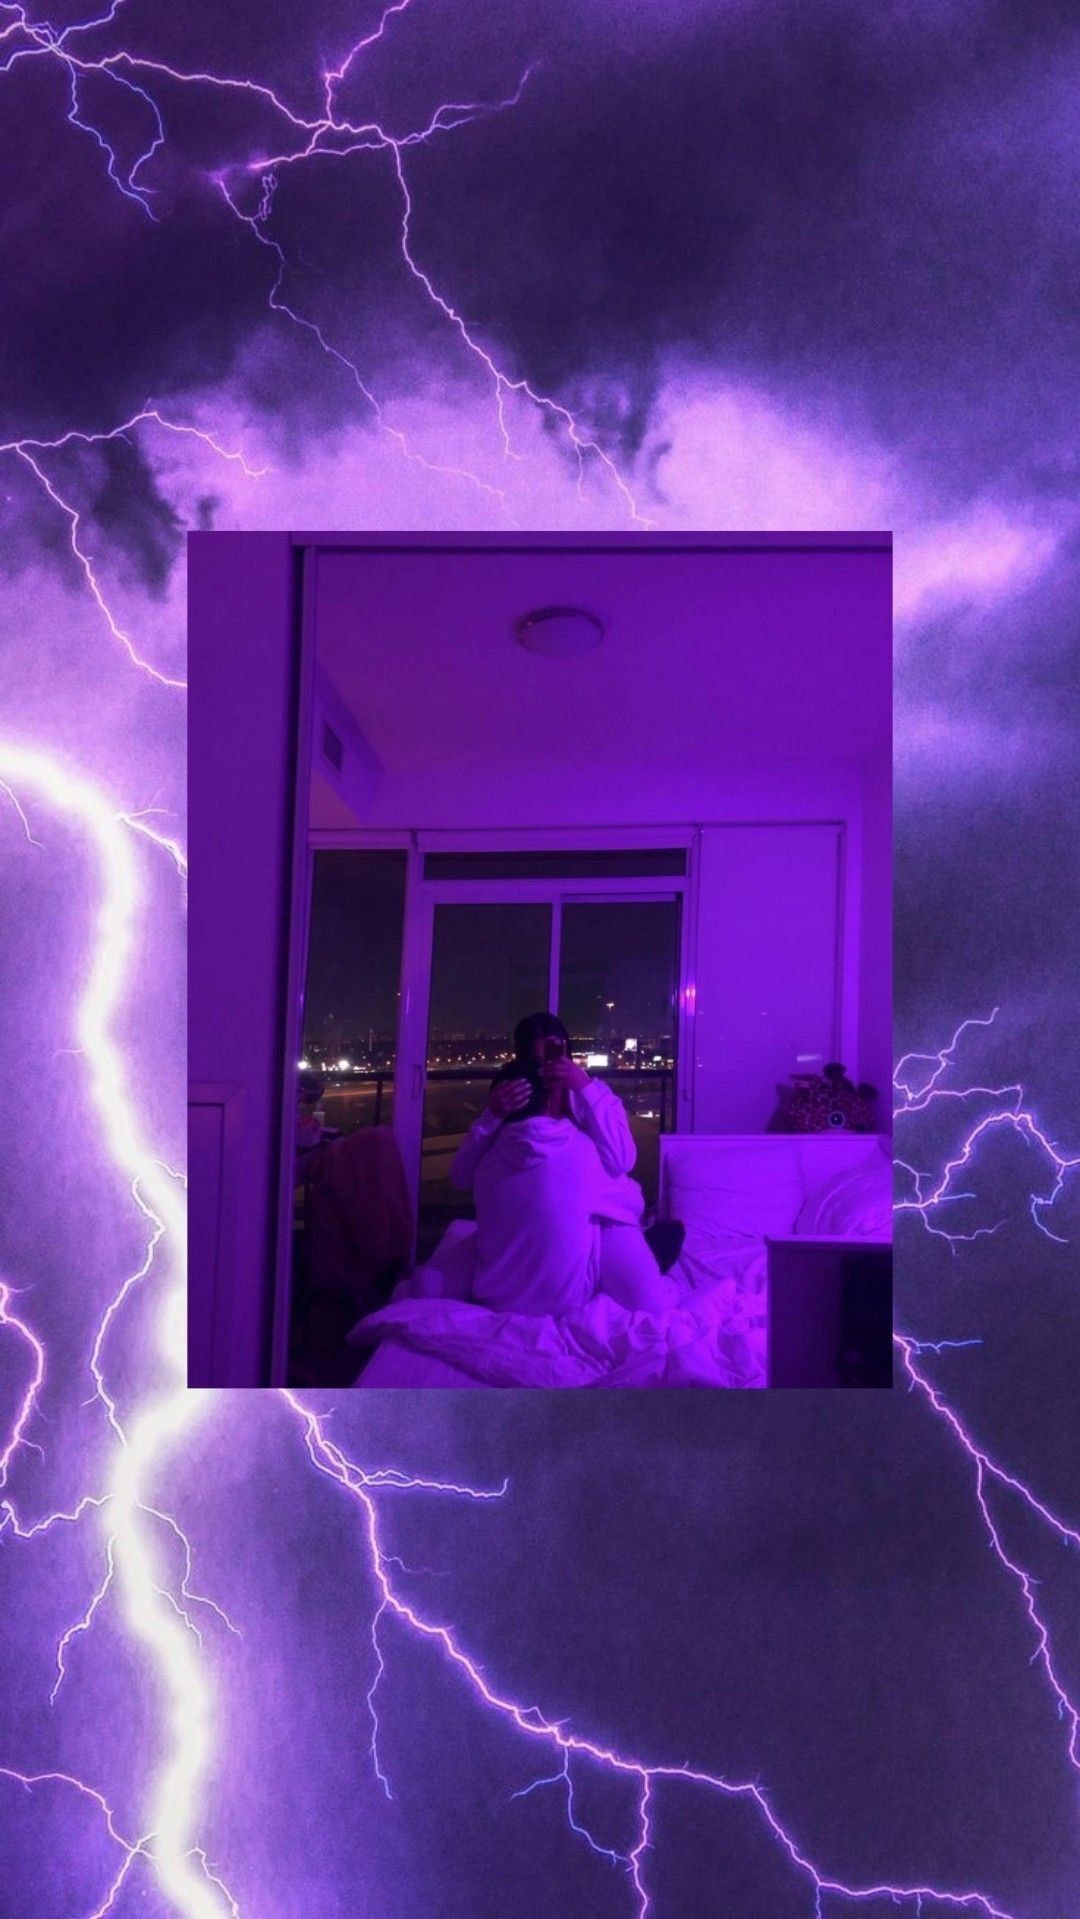 Aesthetic purple lightning storm Wallpaper Download